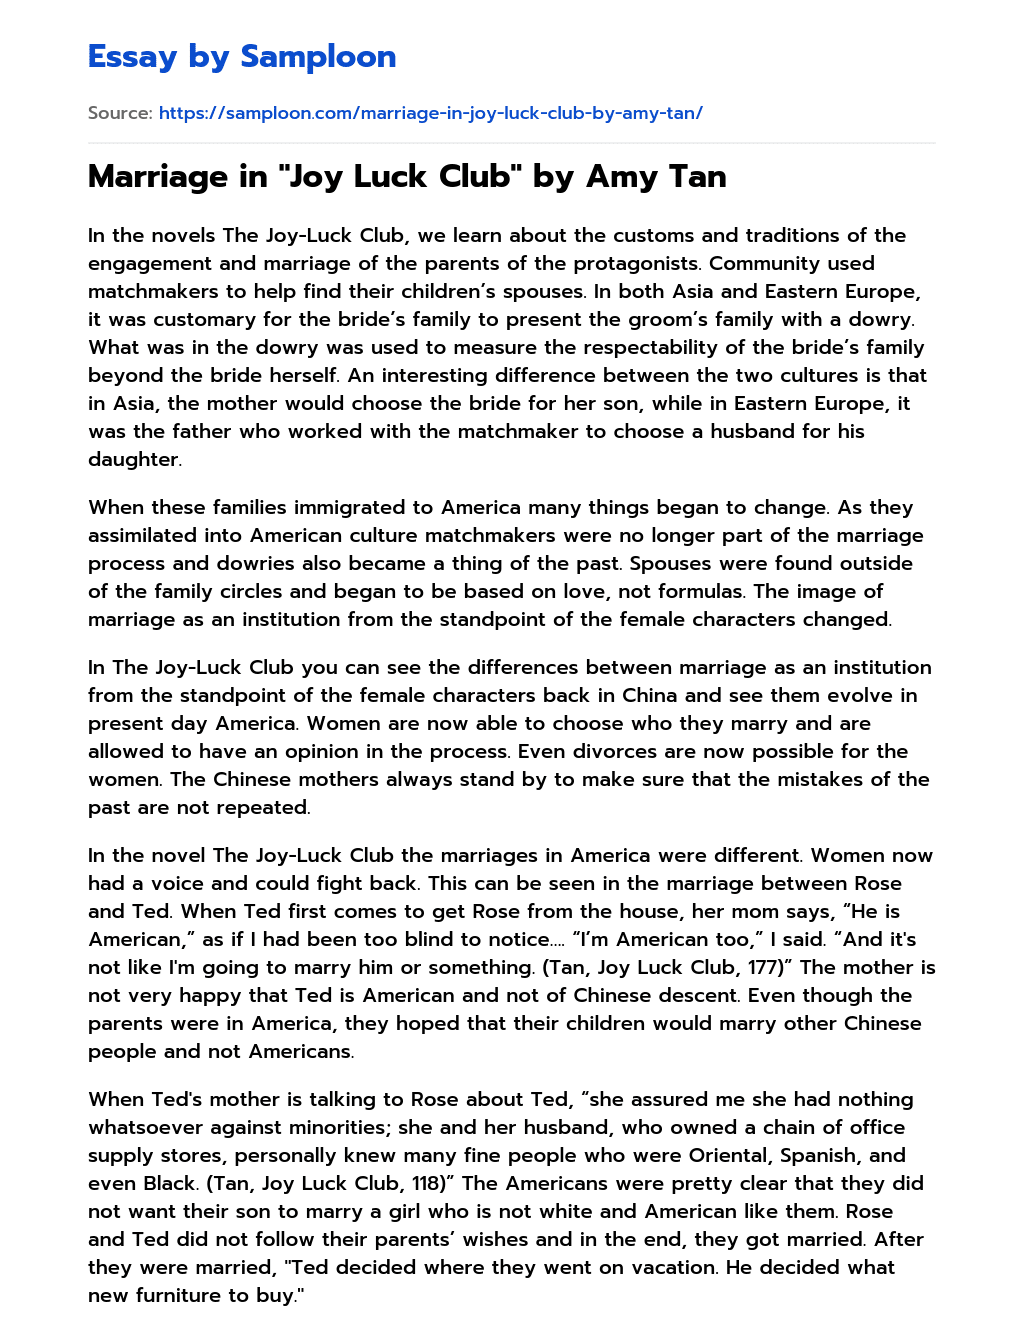 Marriage in “Joy Luck Club” by Amy Tan essay